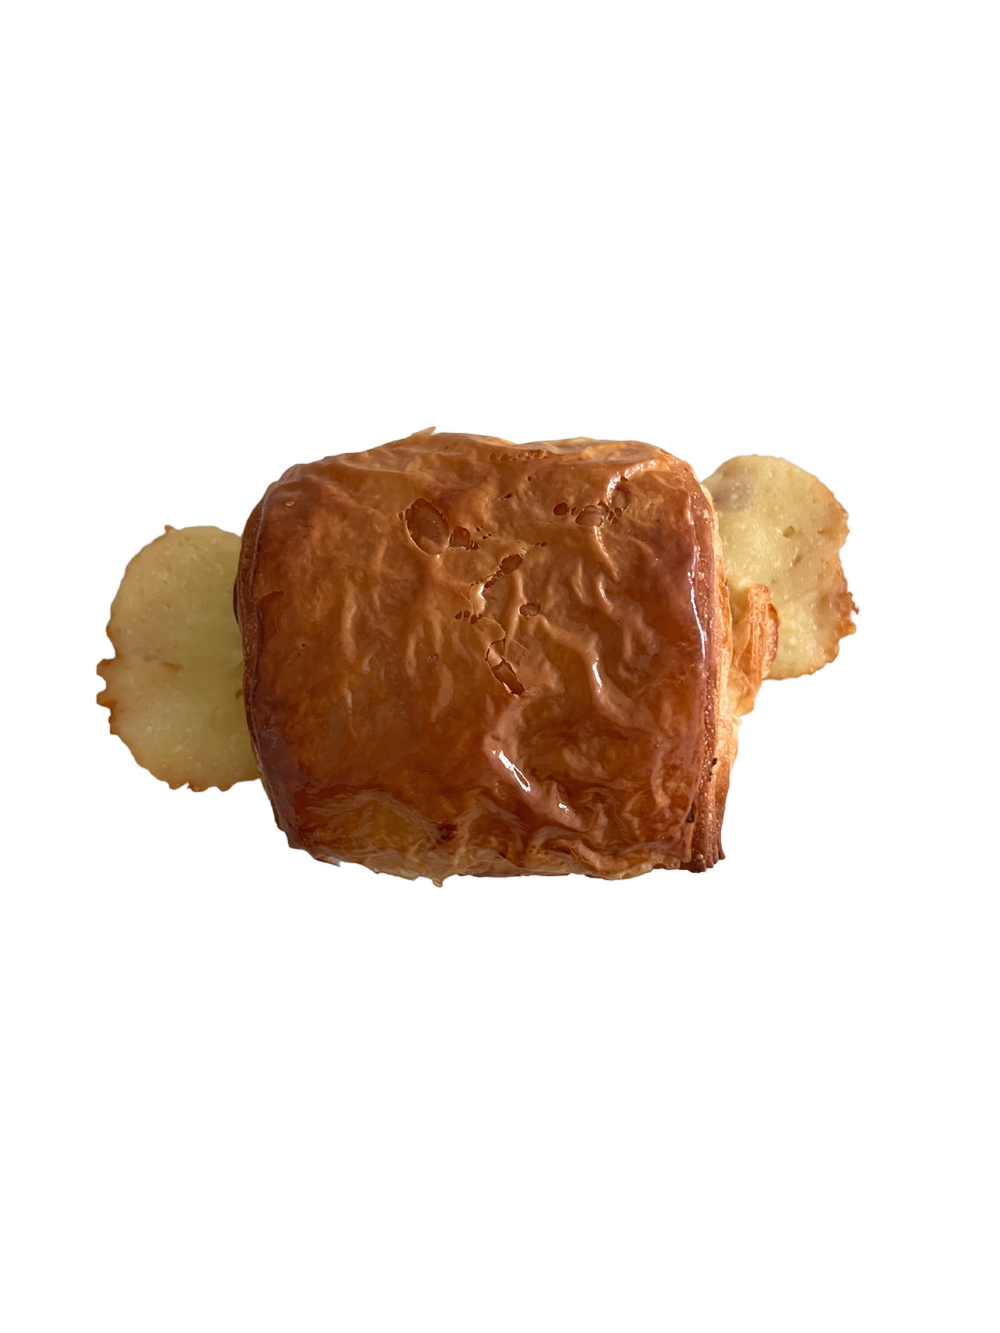 Croissants jambon fromage